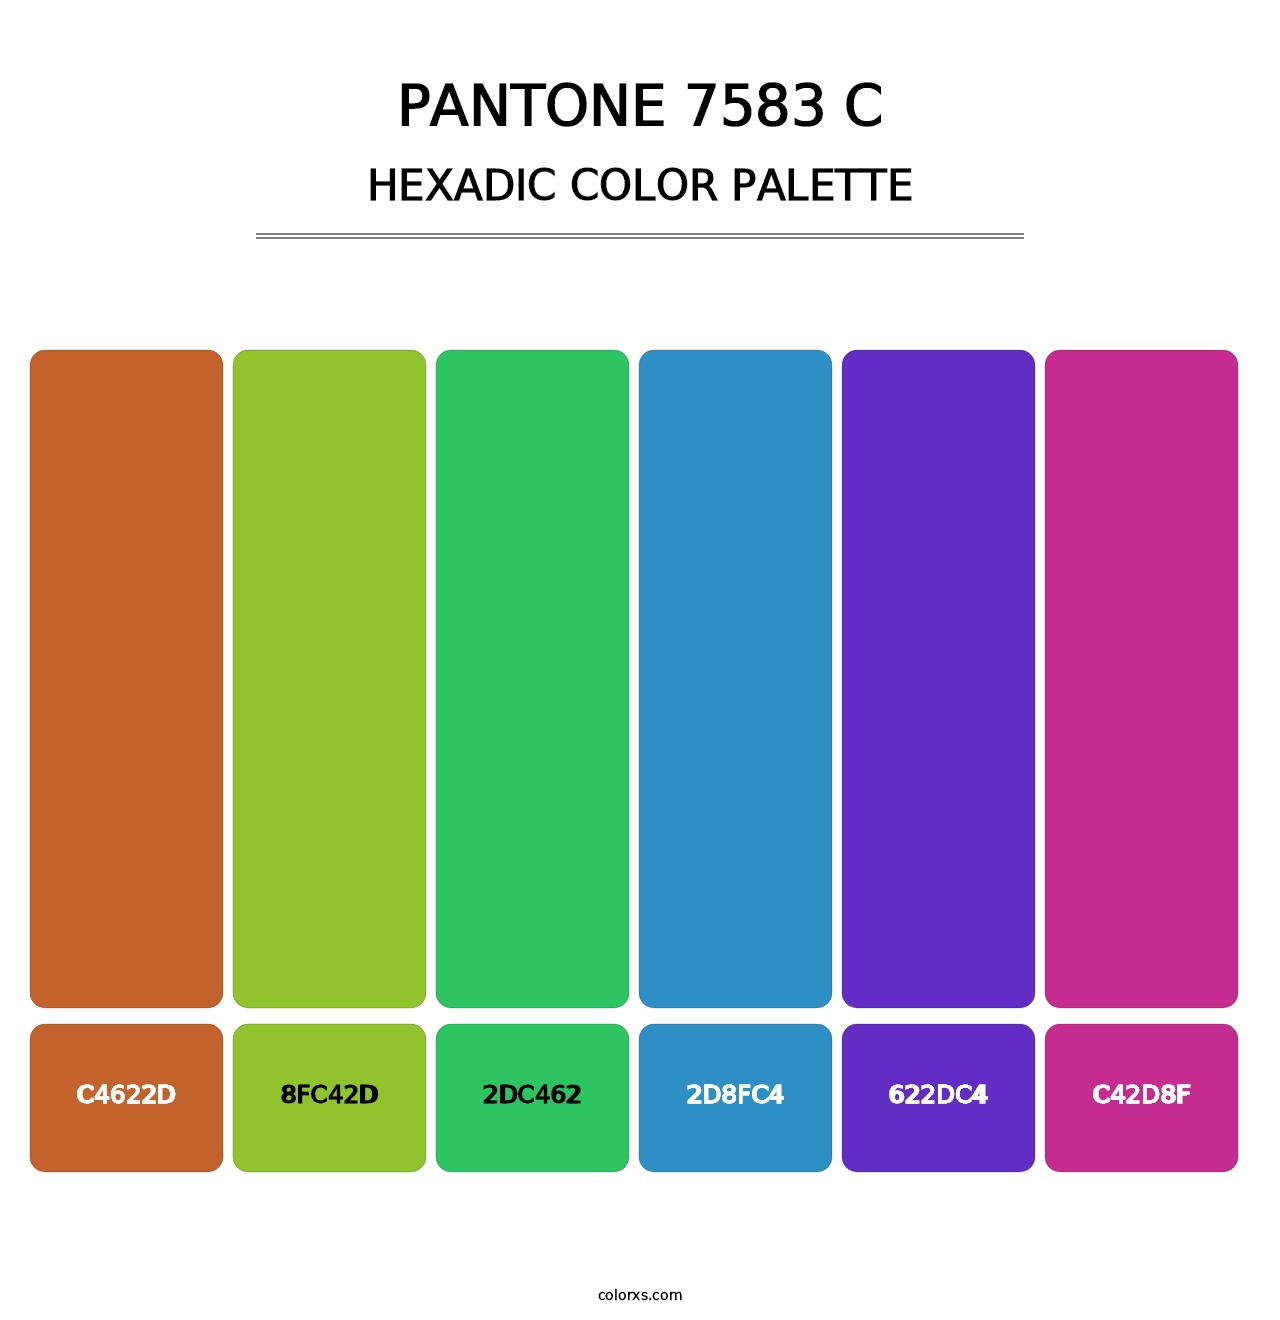 PANTONE 7583 C - Hexadic Color Palette